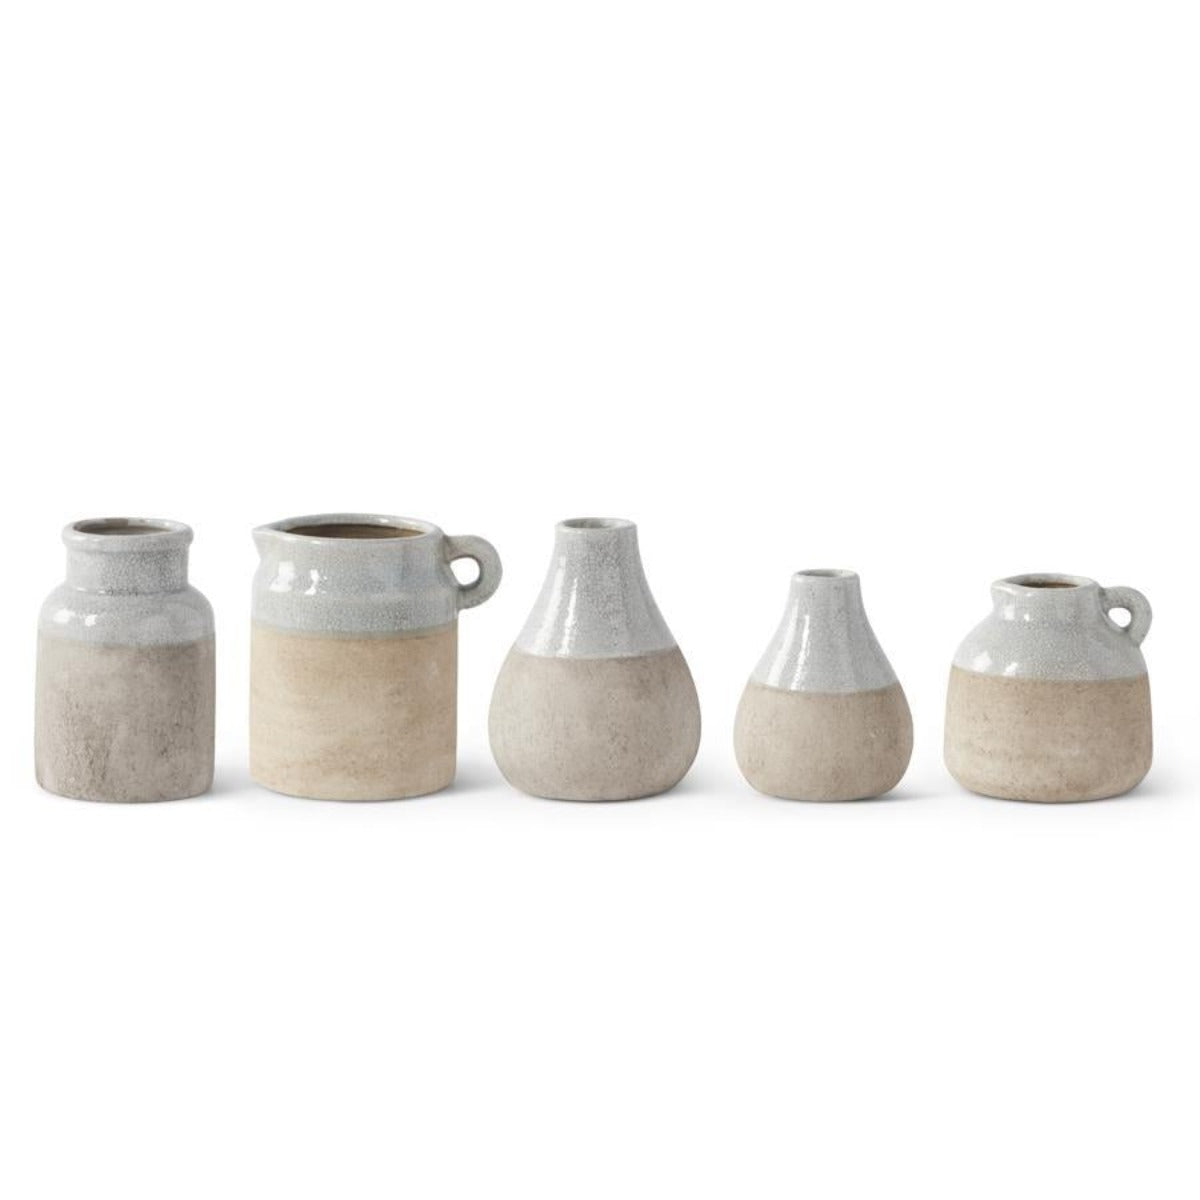 Ceramic Pots With Light Blue Glazed Tops - Set of 5